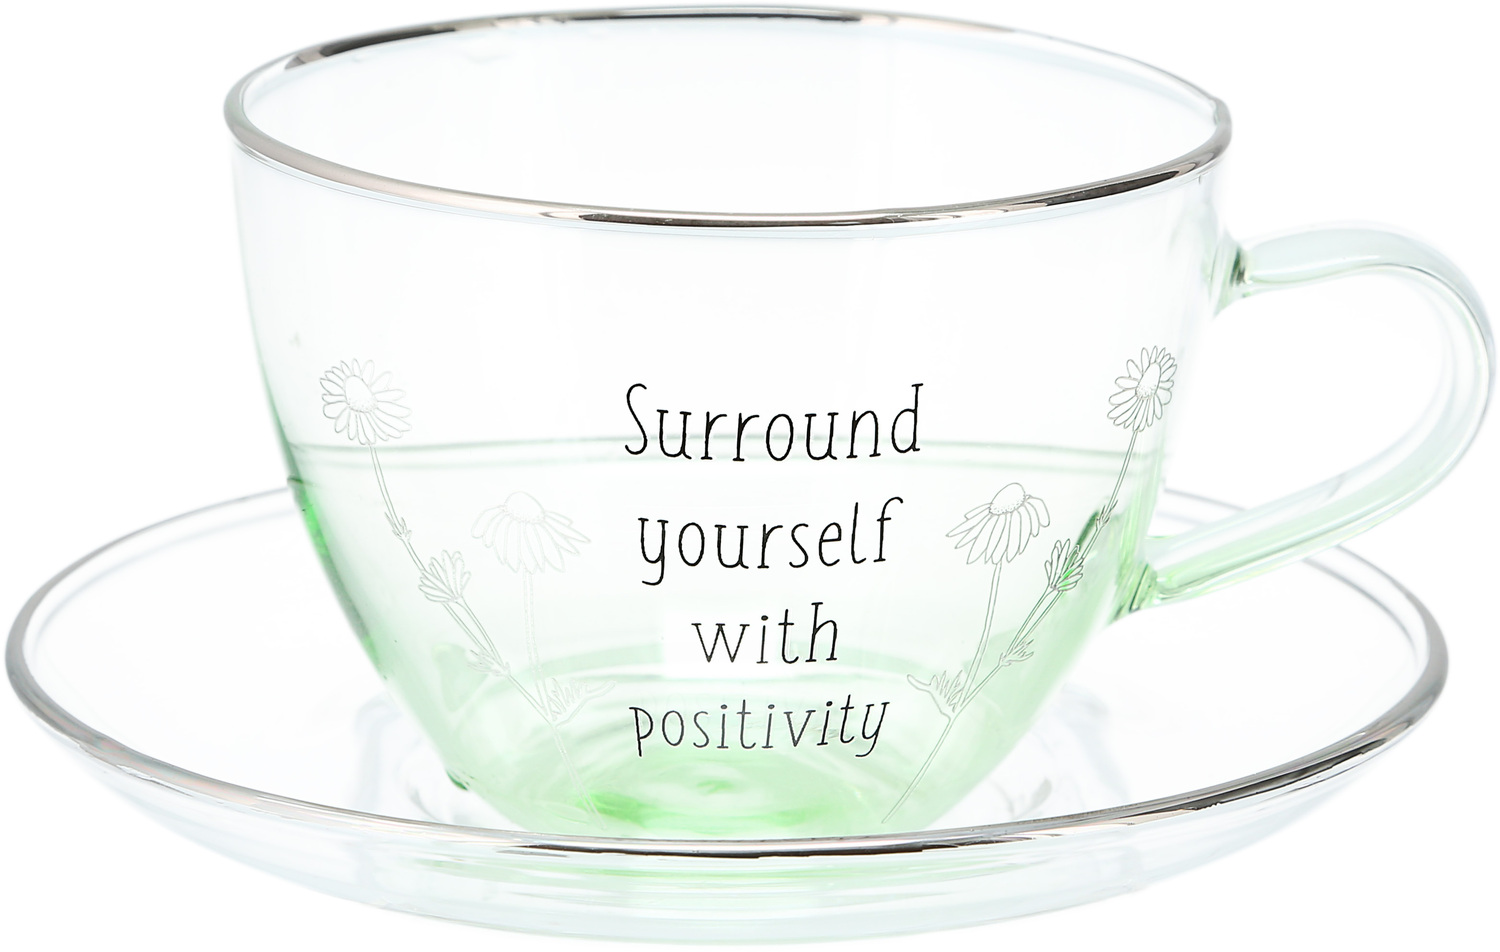 Positivity by Faith Hope and Healing - Positivity - 7 oz Glass Tea Cup and Saucer